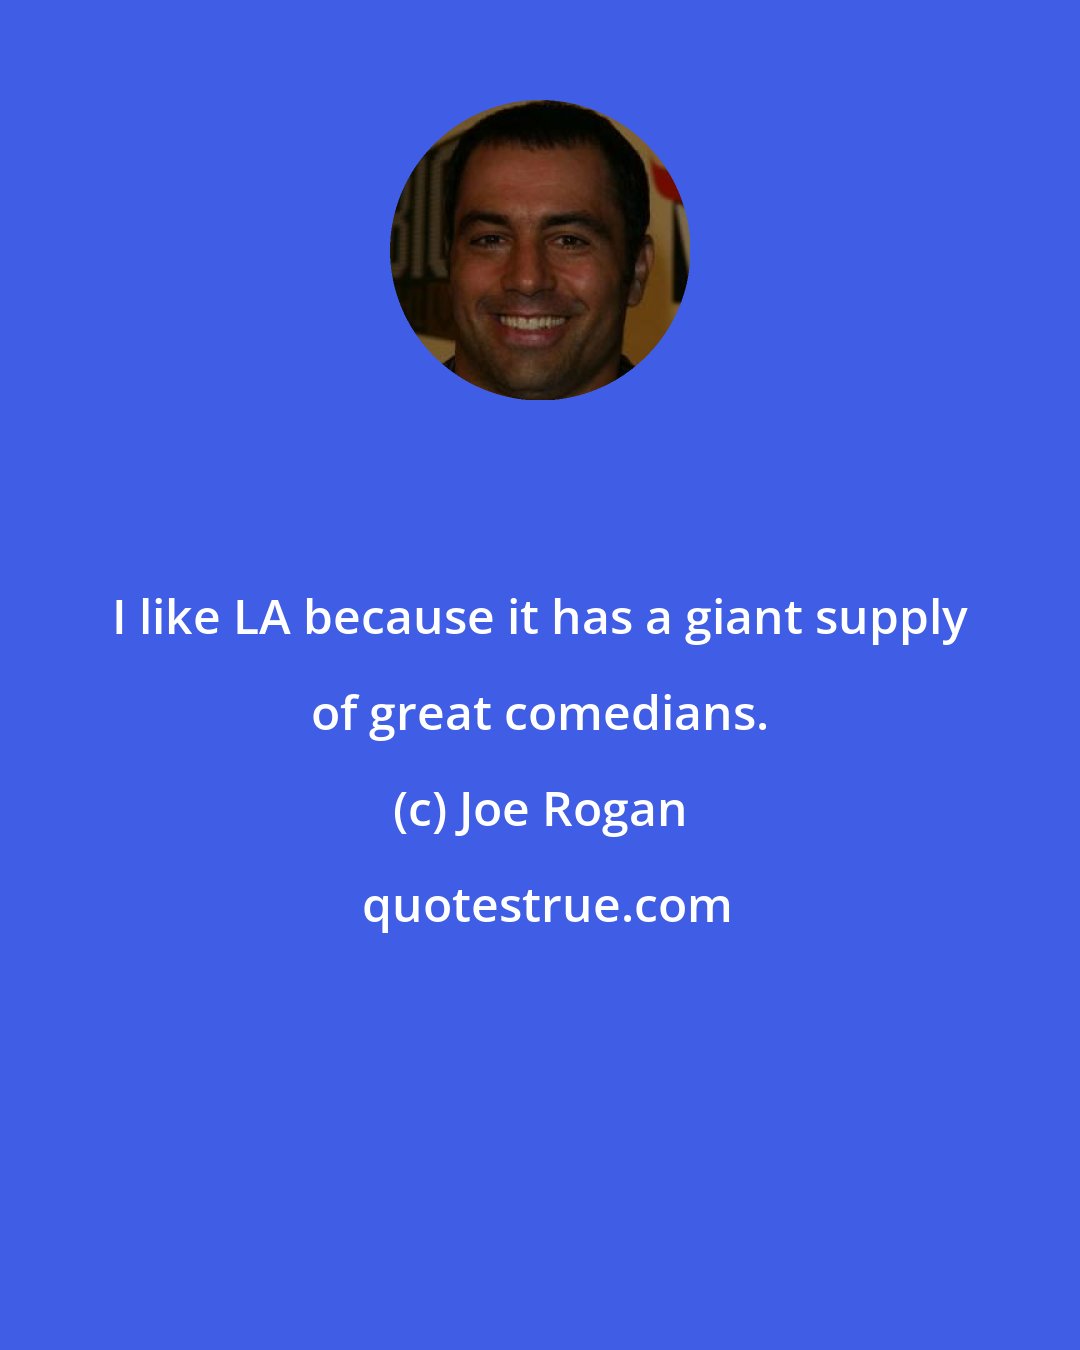 Joe Rogan: I like LA because it has a giant supply of great comedians.